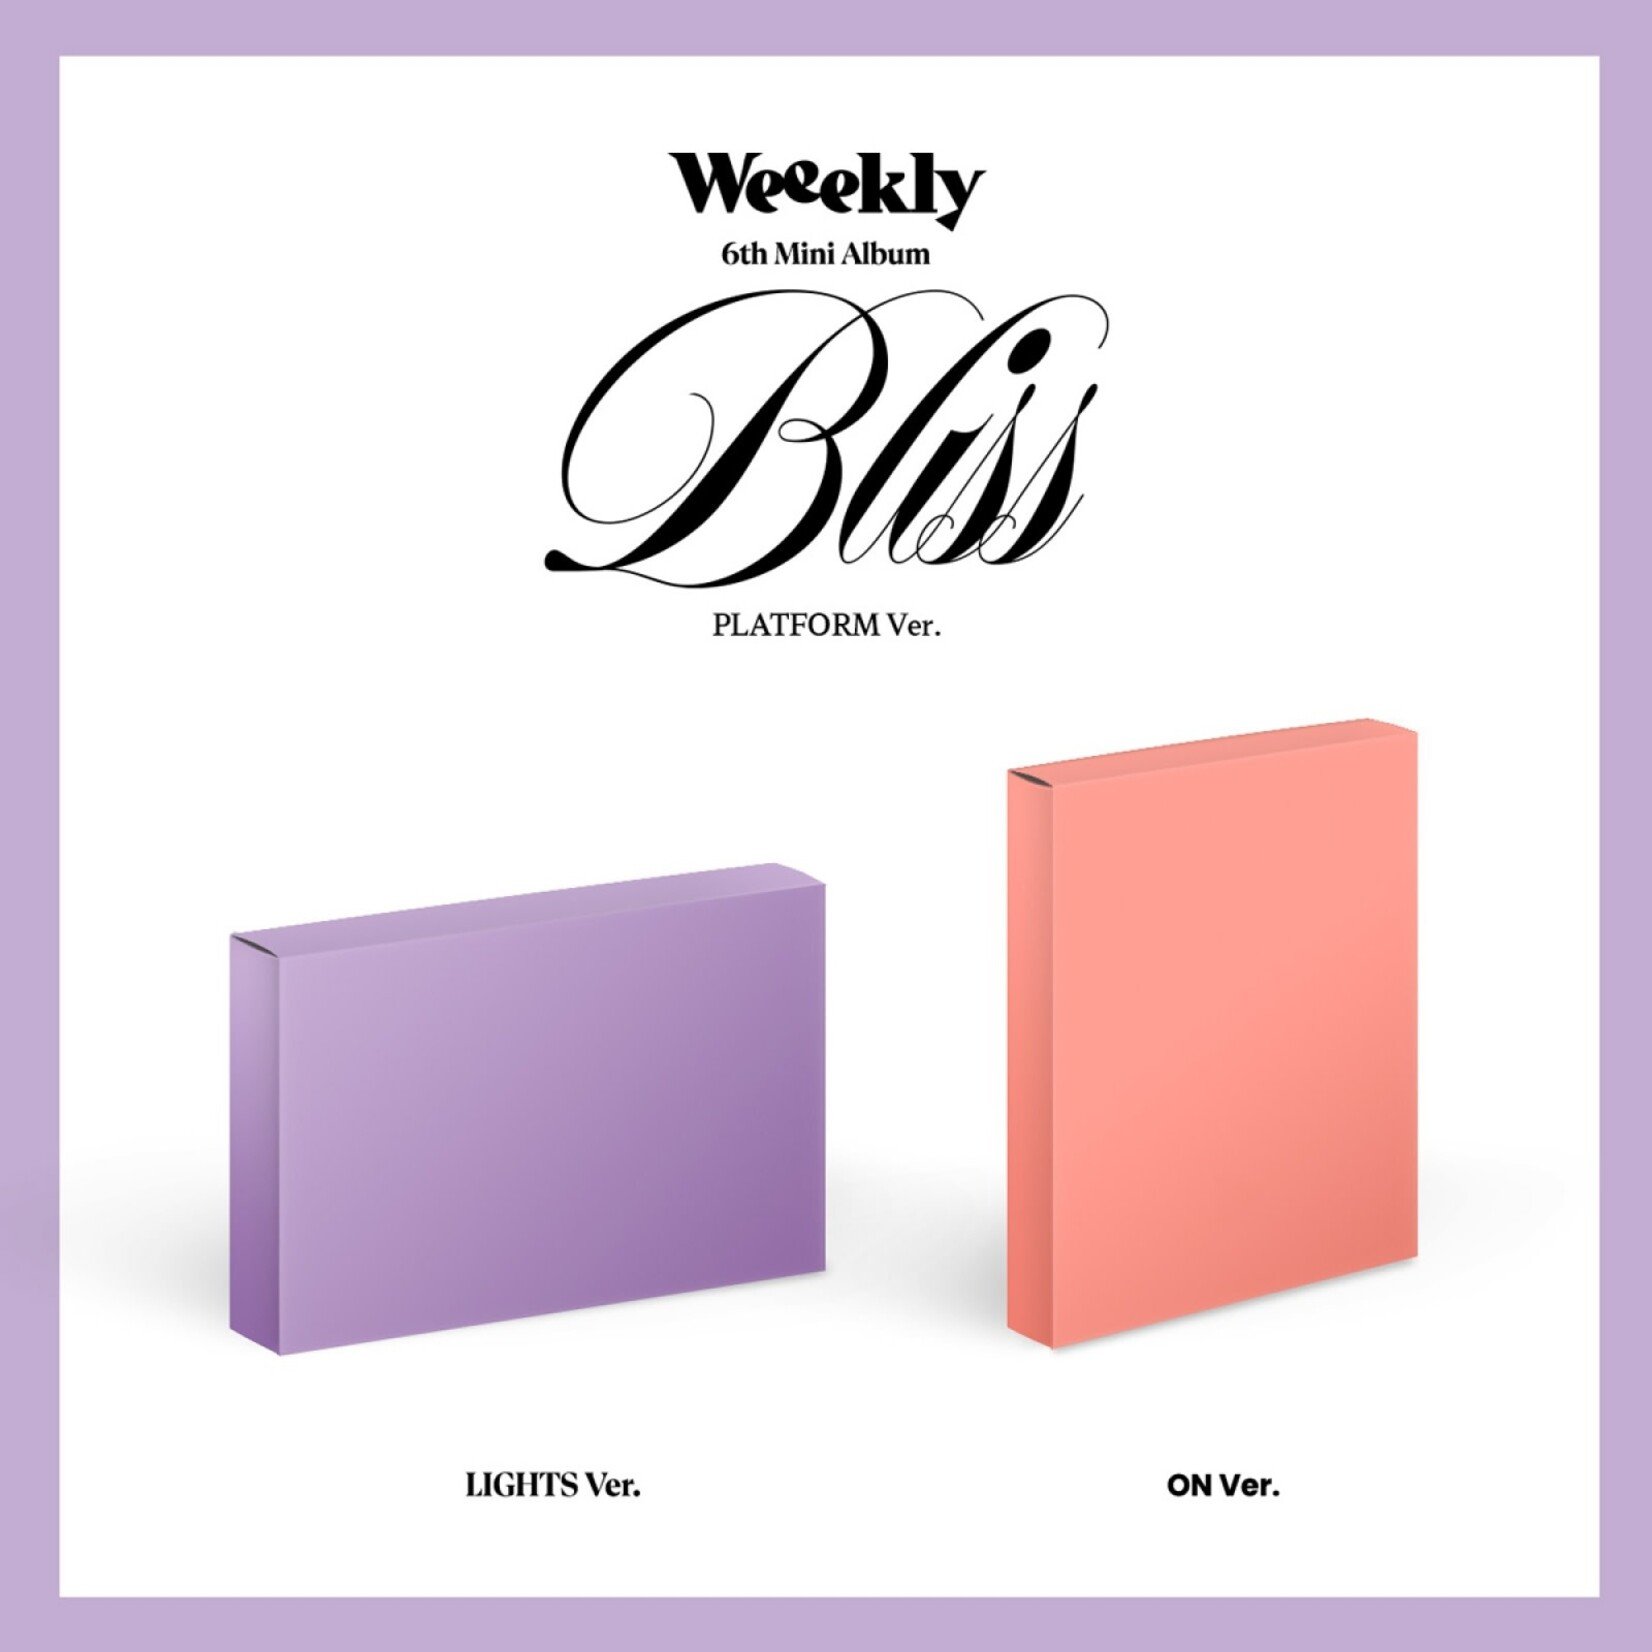 Weeekly Weeekly - 6th Mini Album [Bliss] (Platform Ver.)